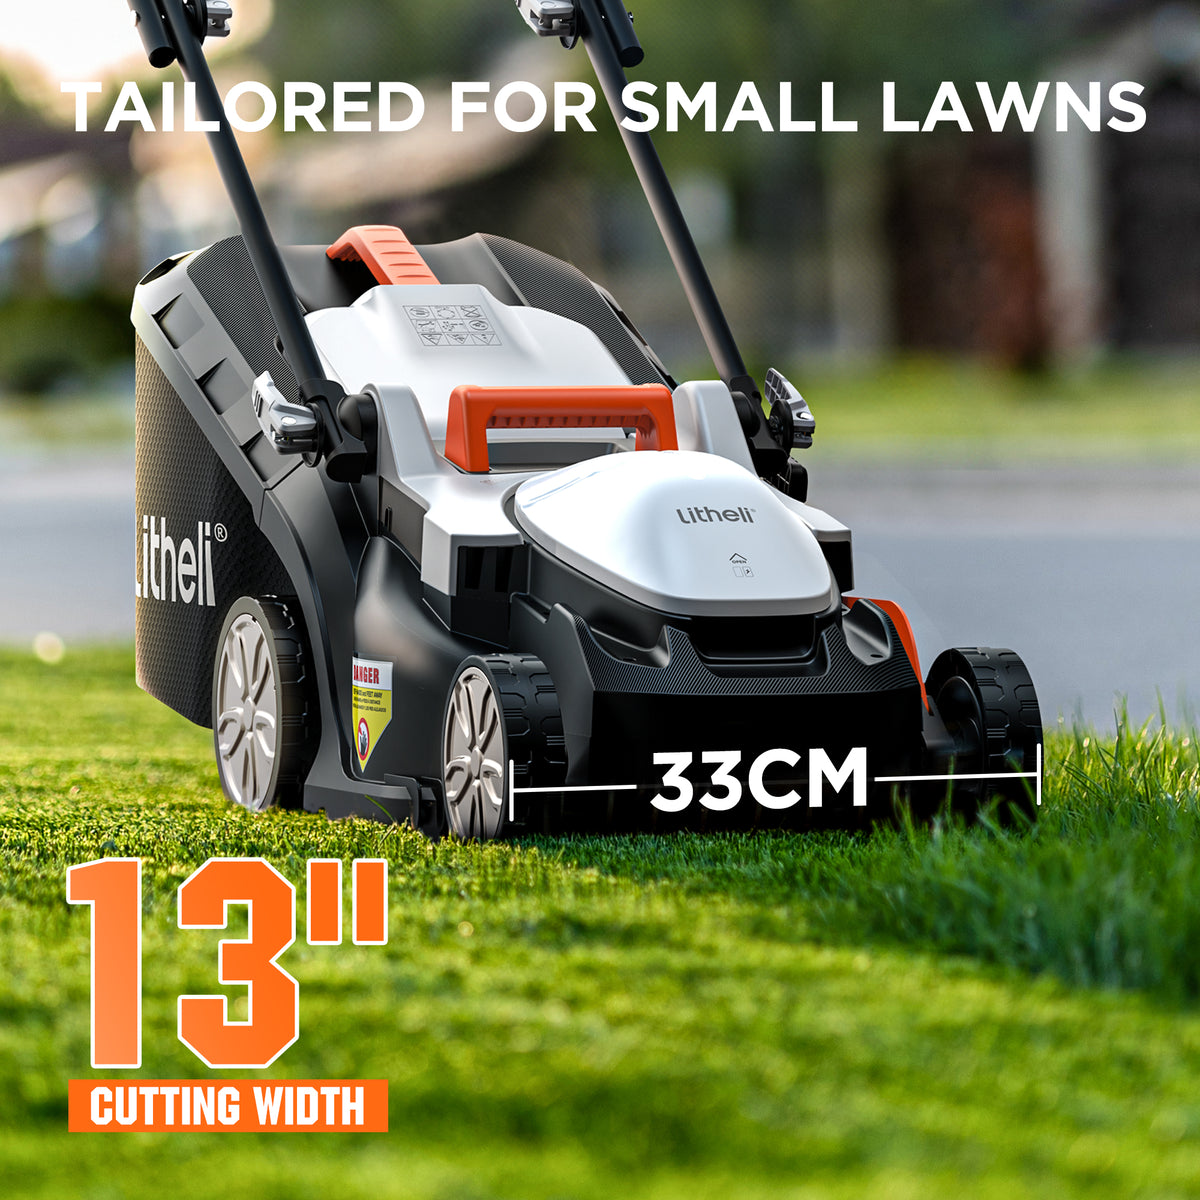 Litheli U20 SE 20V Cordless Lawn Mower